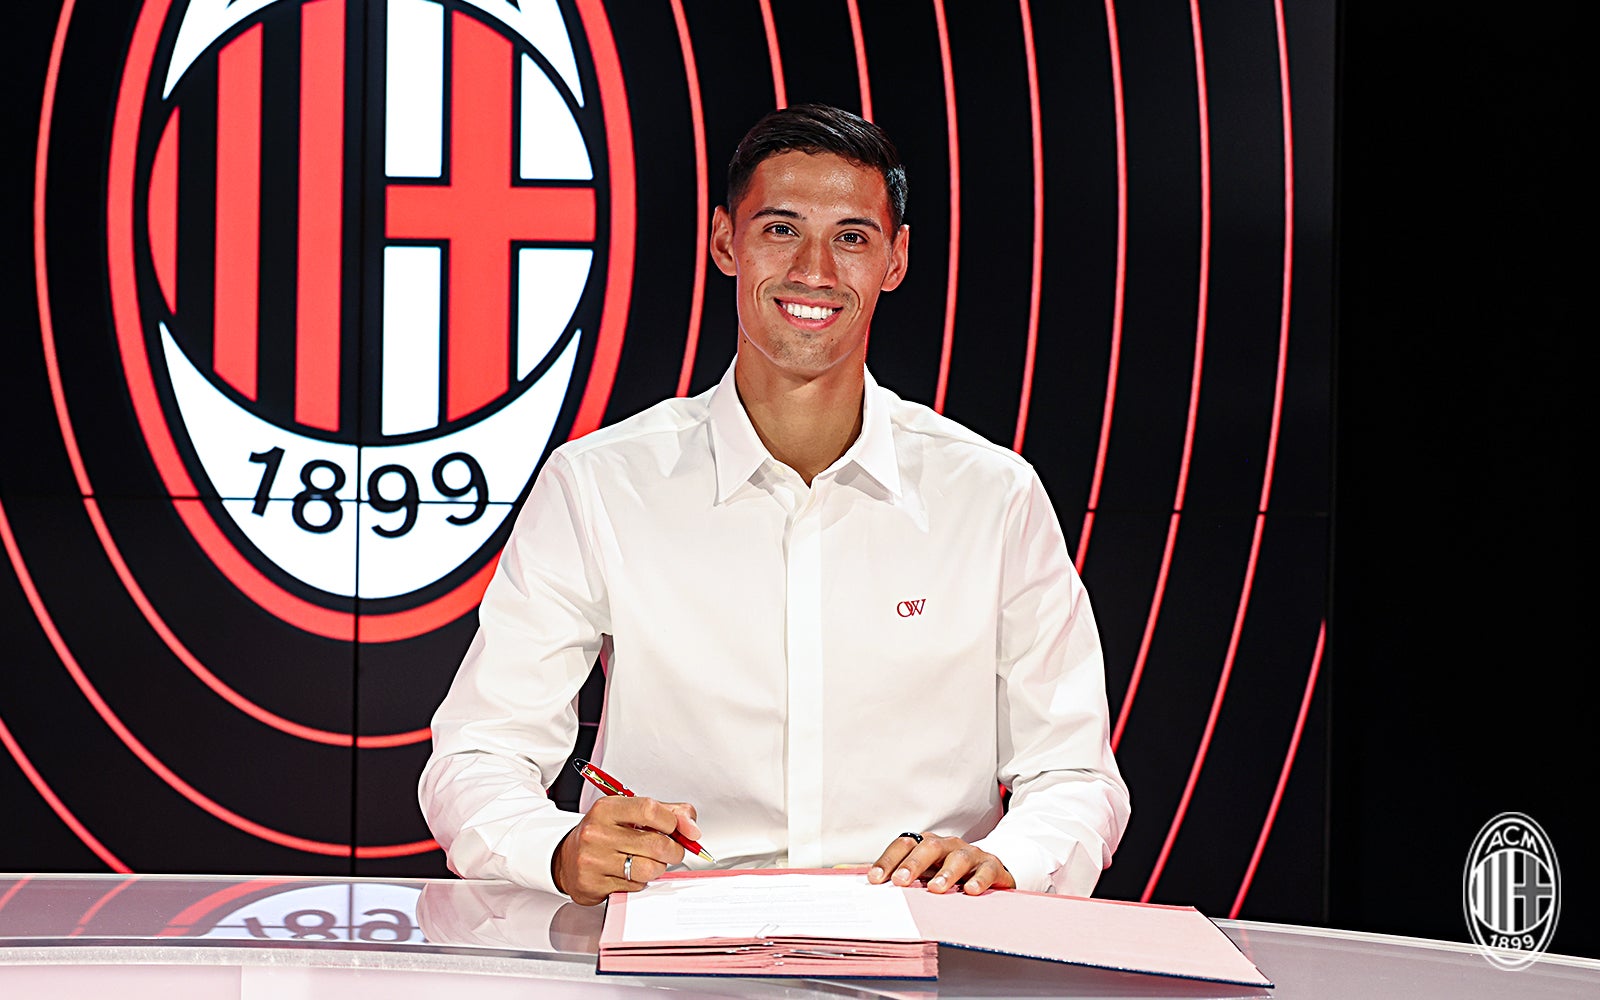 Tijjani Reijnders, AC Milan's latest signing: Fun Facts